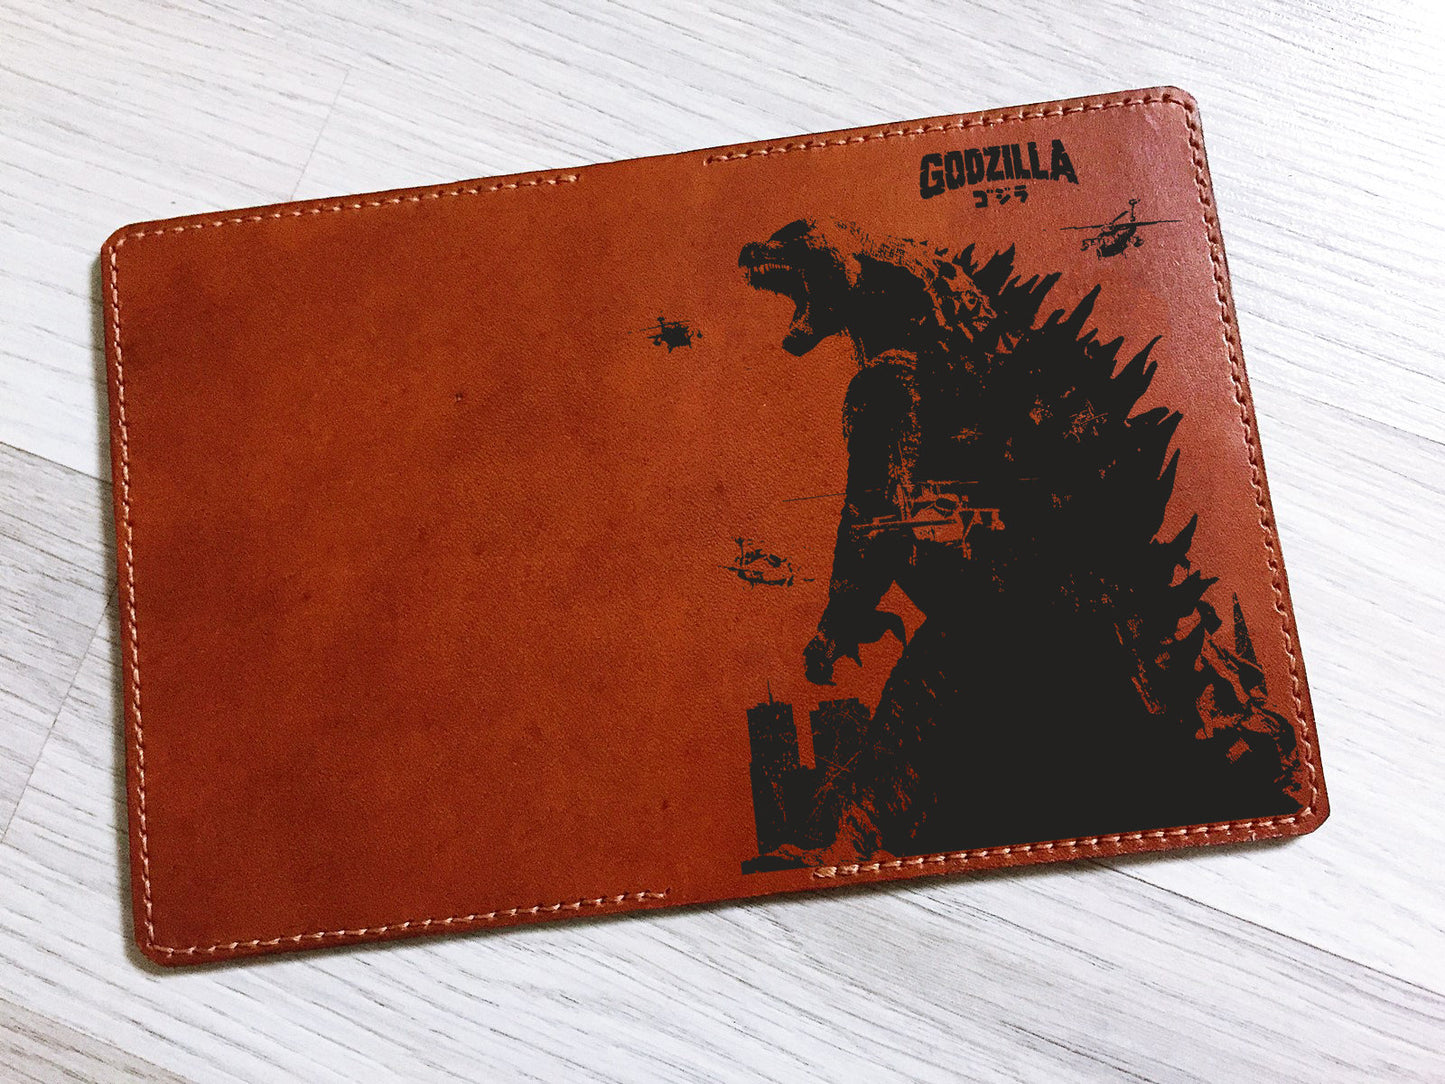 Personalized Godzilla Leather Passport Wallet, Passport Cover, Passport Holder, Custom travel gift, Anniversary gift ideas